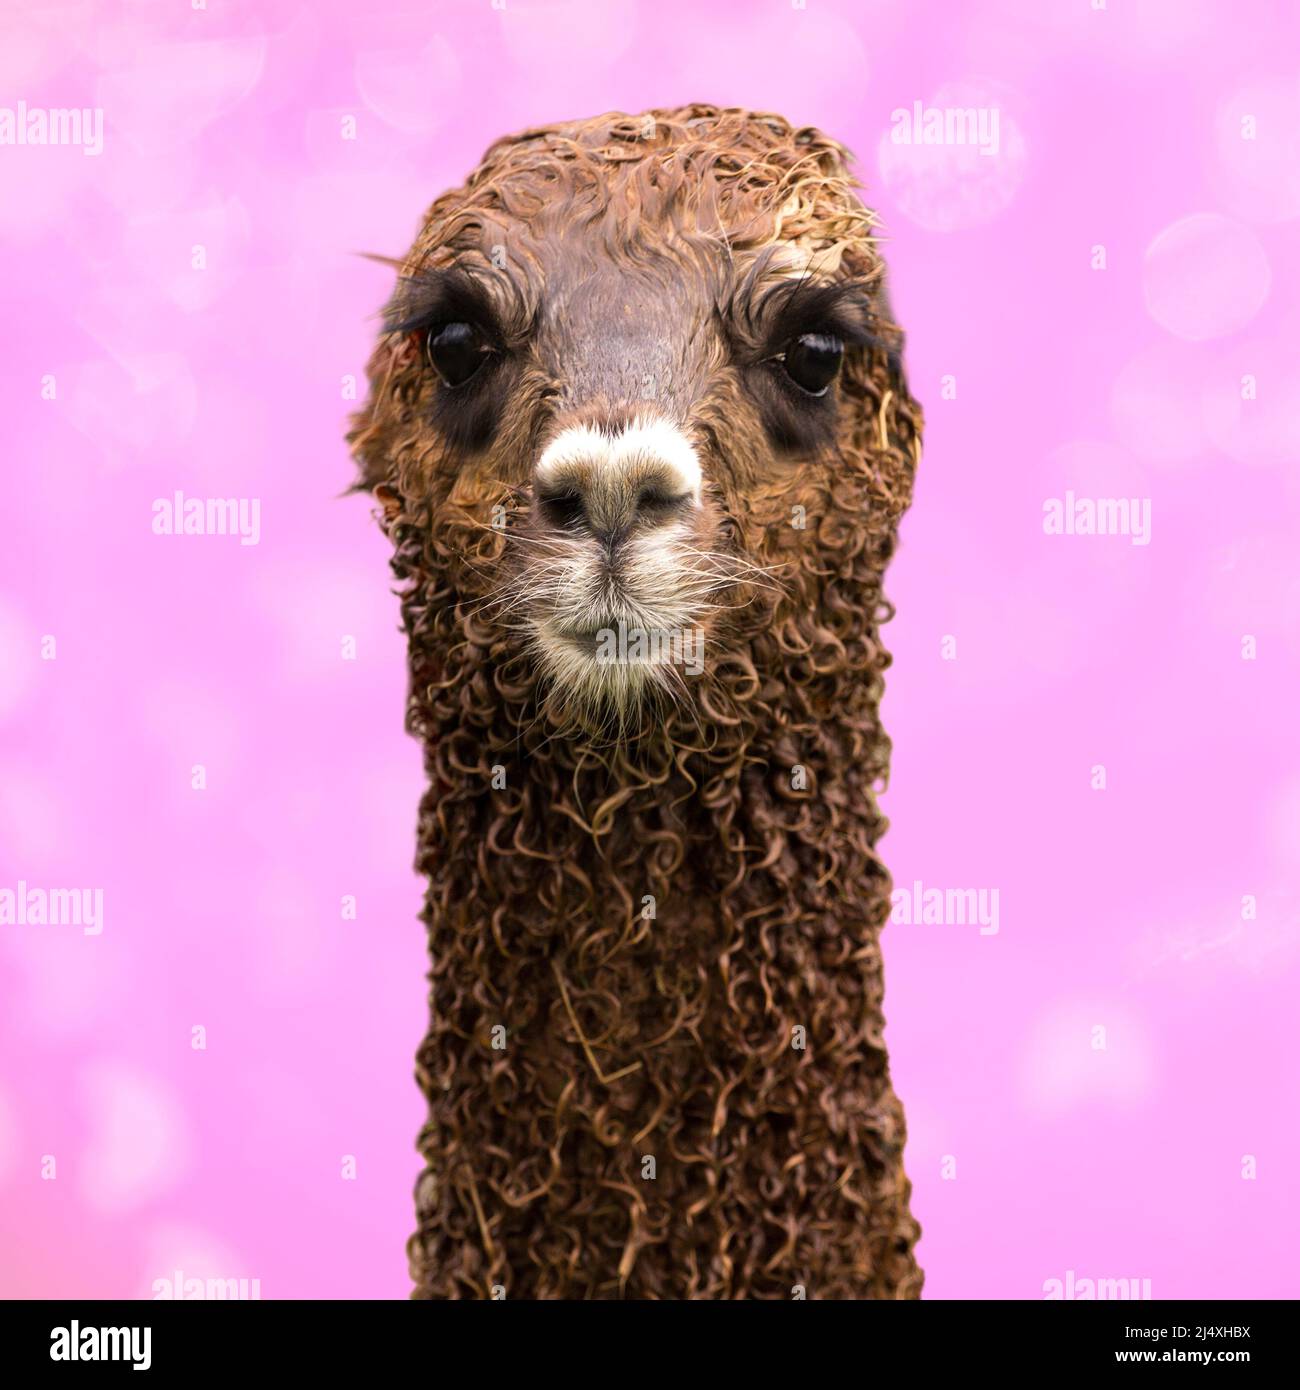 Cute alpaca baby on pink background. Stock Photo